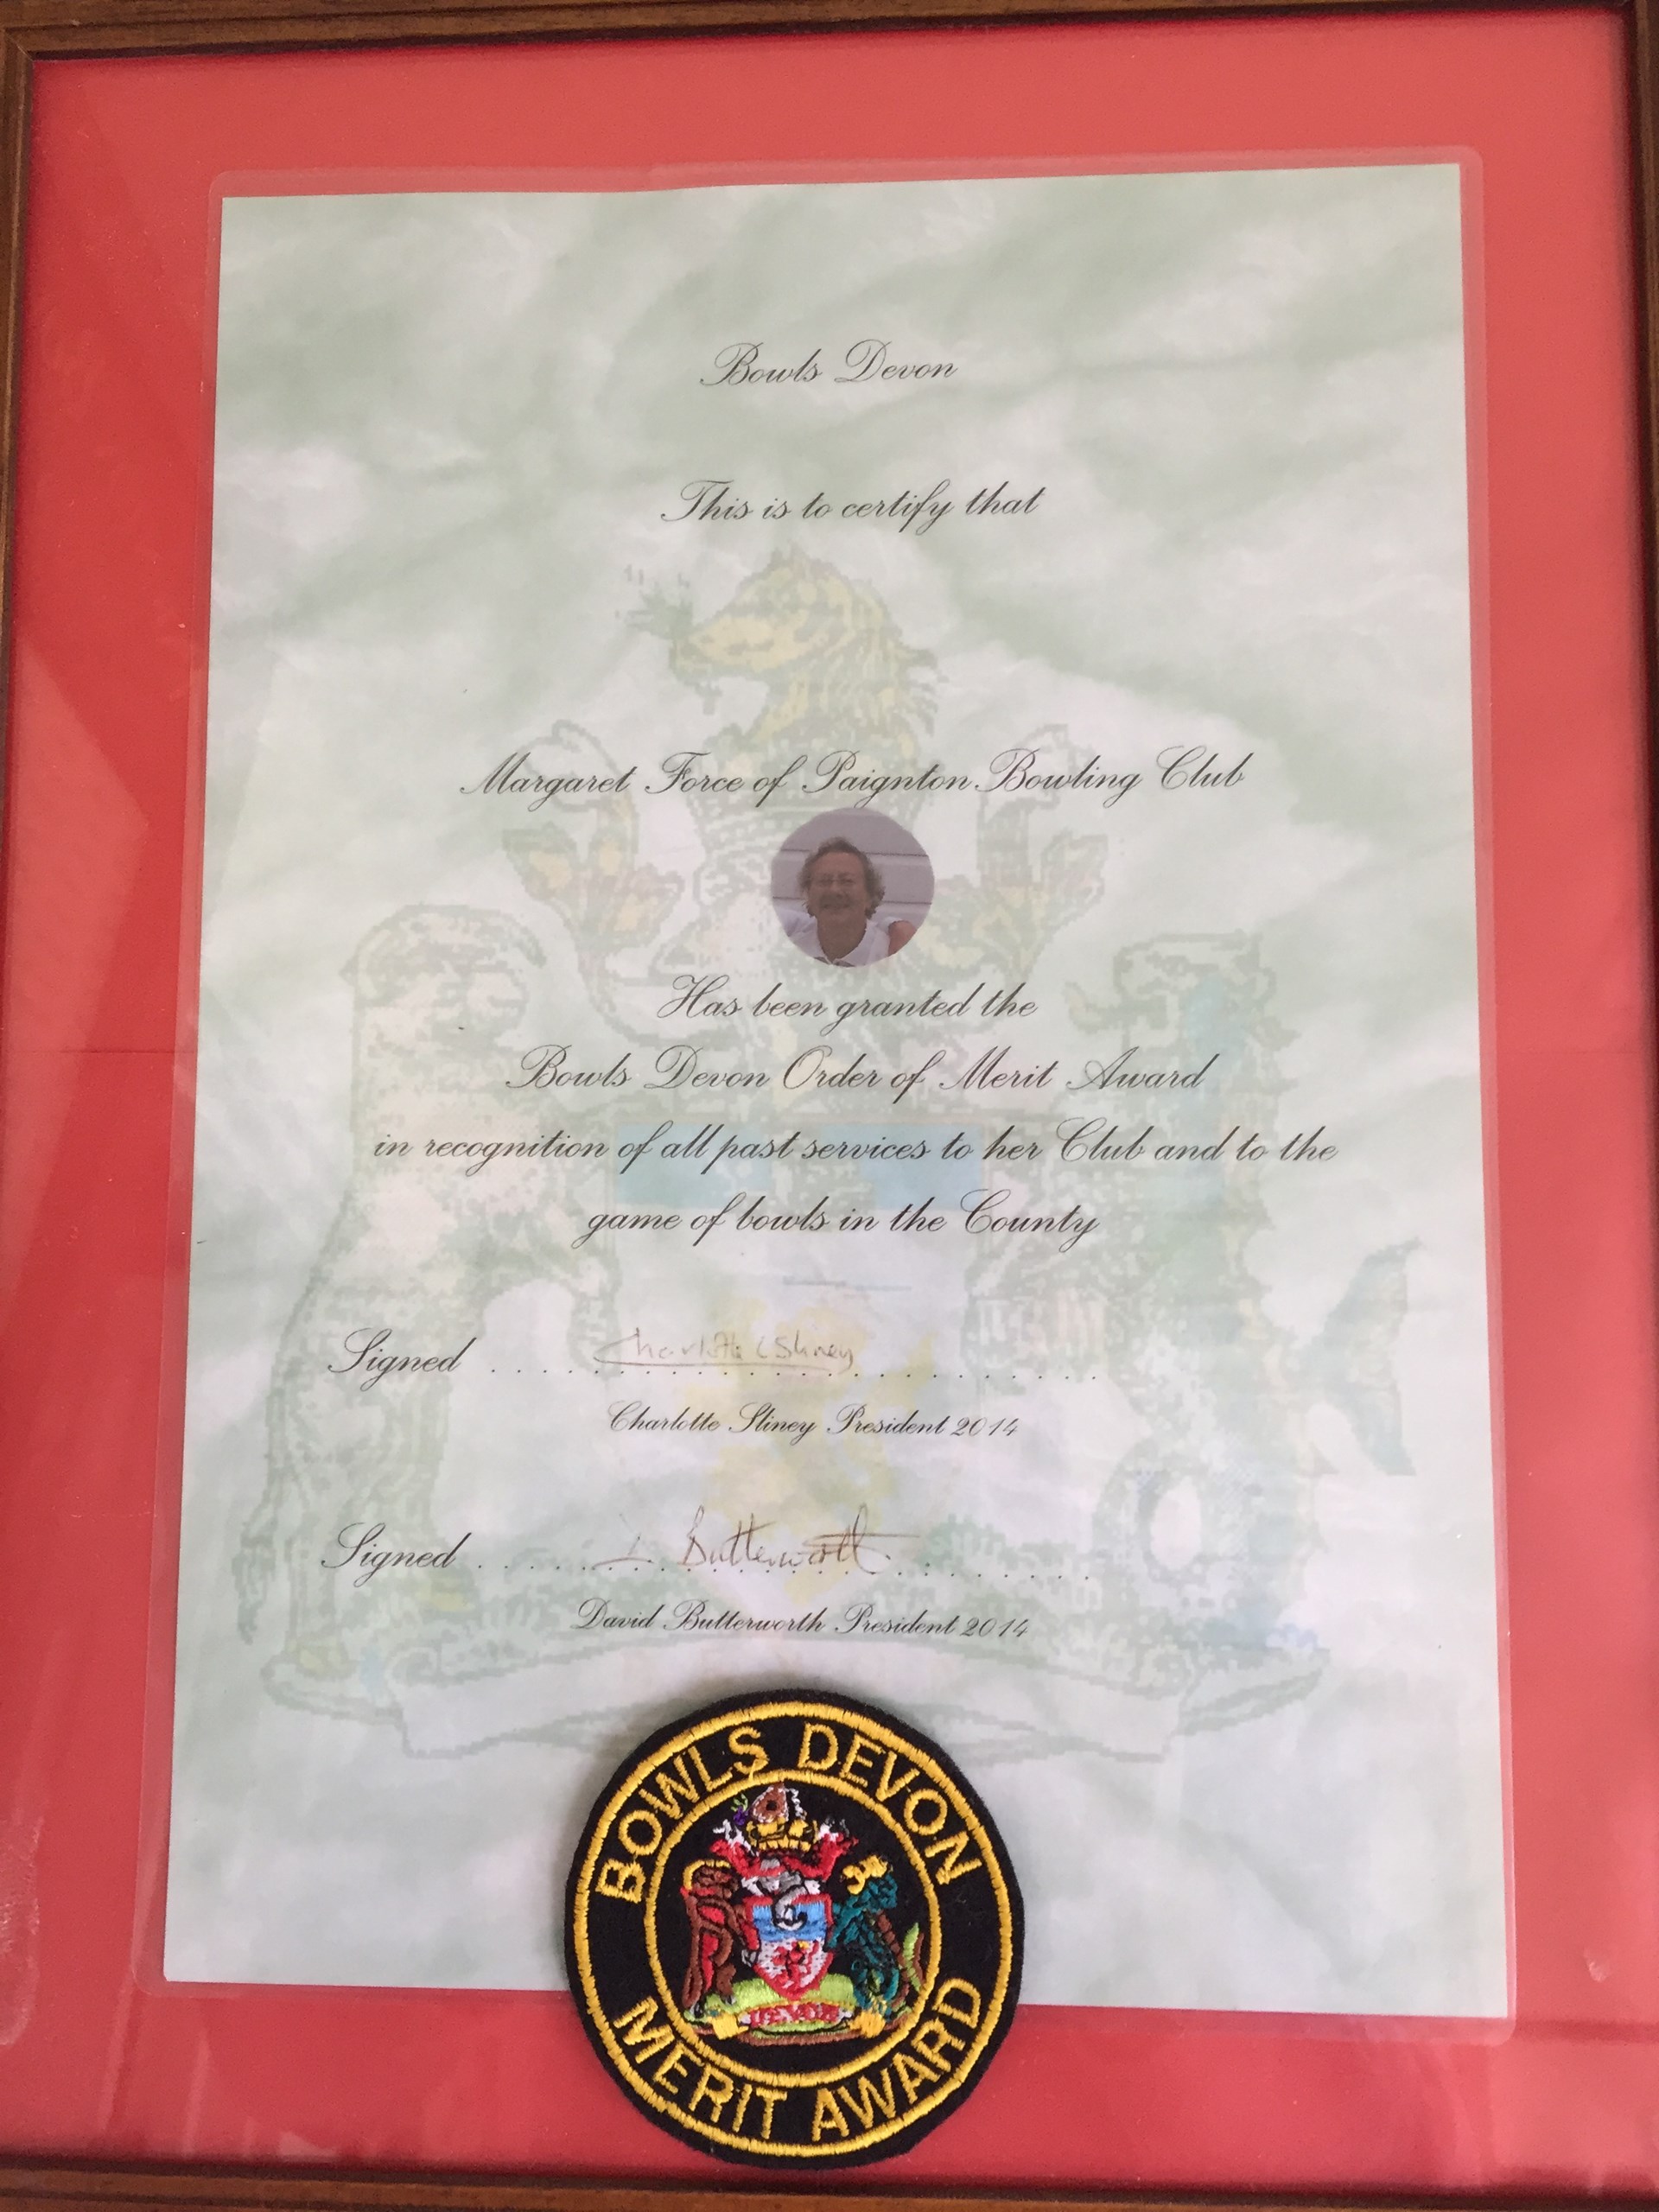 Paignton Bowling Club Margaret Force - Devon Order of Merit